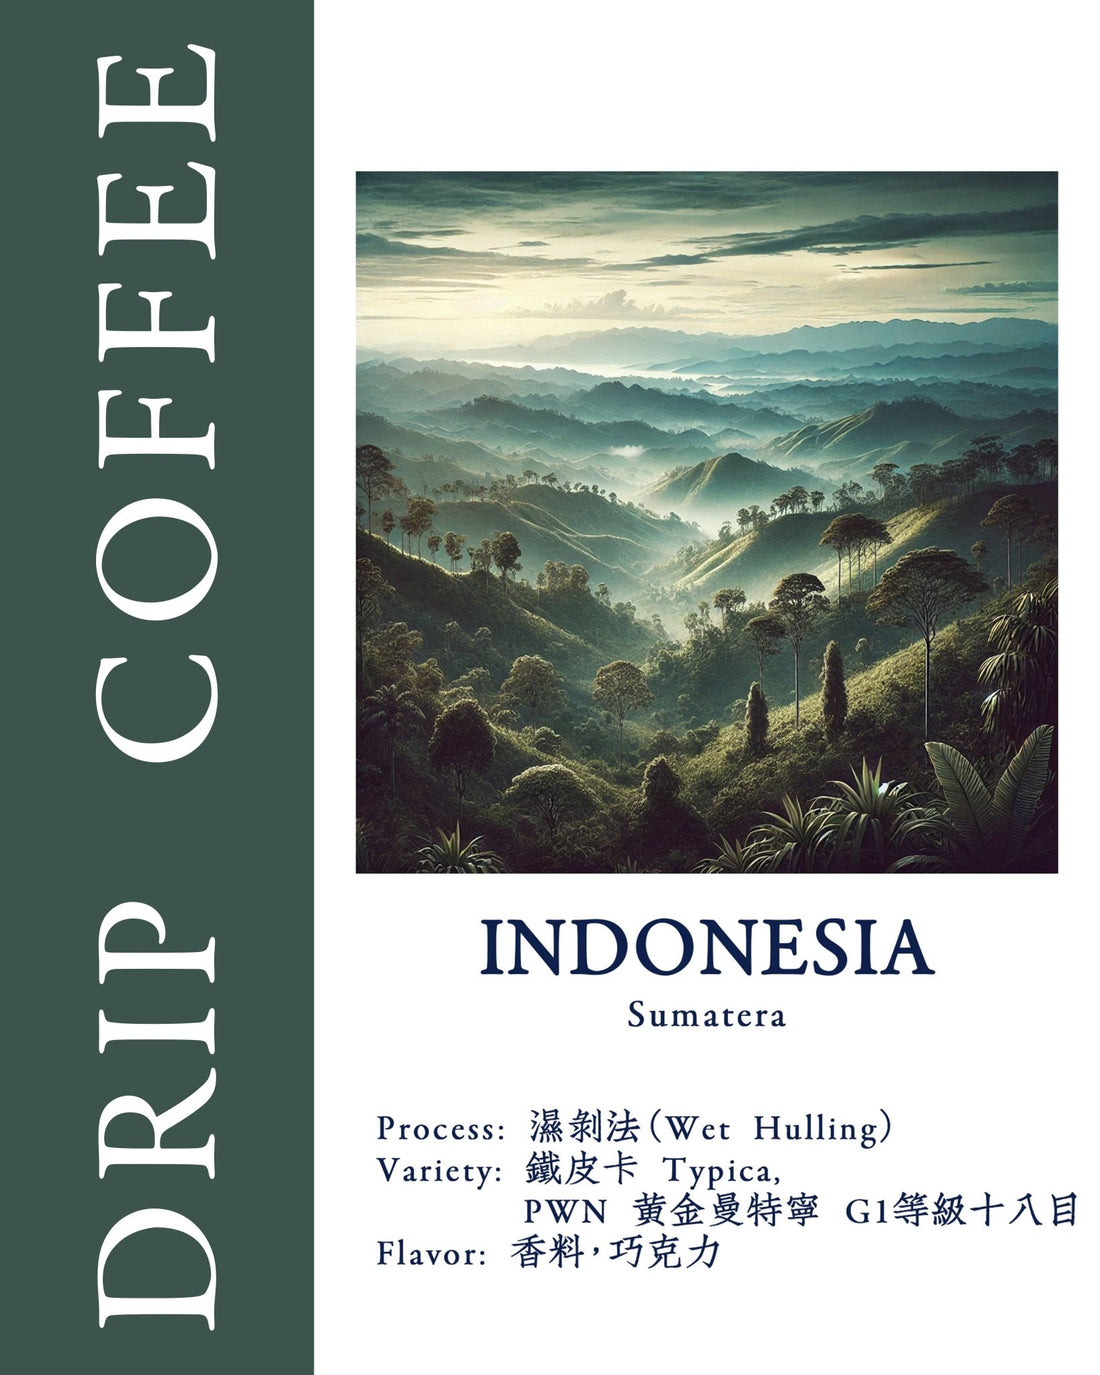 【Sumatra】Indonesia｜Dark Roast｜Typica Variety｜PWN Golden Mandheling G1 Grade Eighteen Screen ｜Wet Hulled Process｜Sip Coffee Lightly